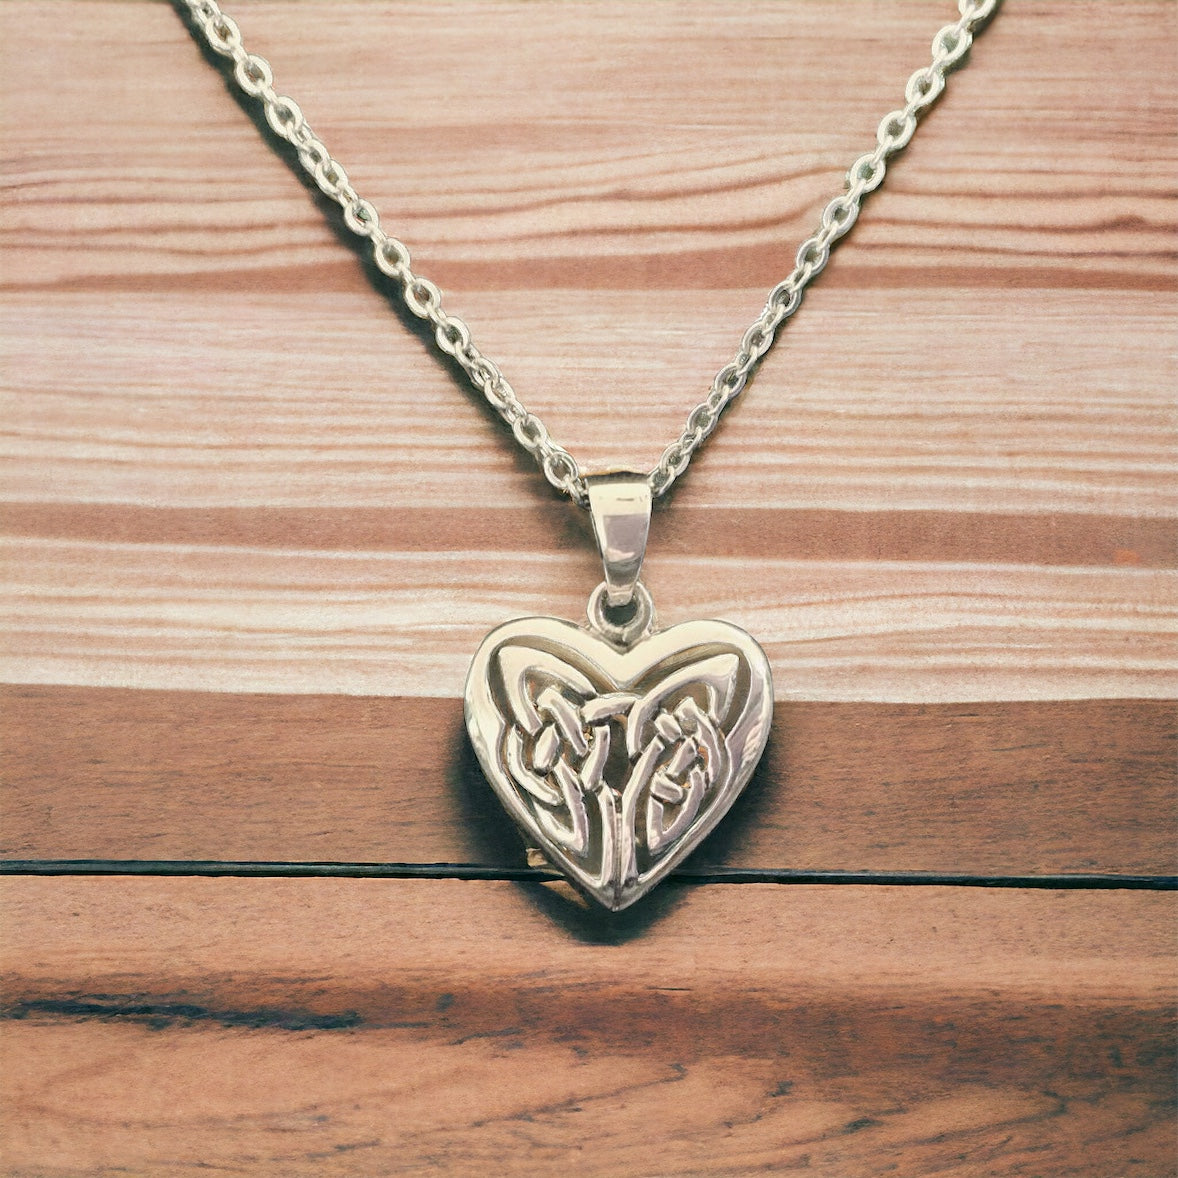 Handcast 925 Sterling Silver Celtic Love Knot Loveknot Heart Pendant + Free Chain